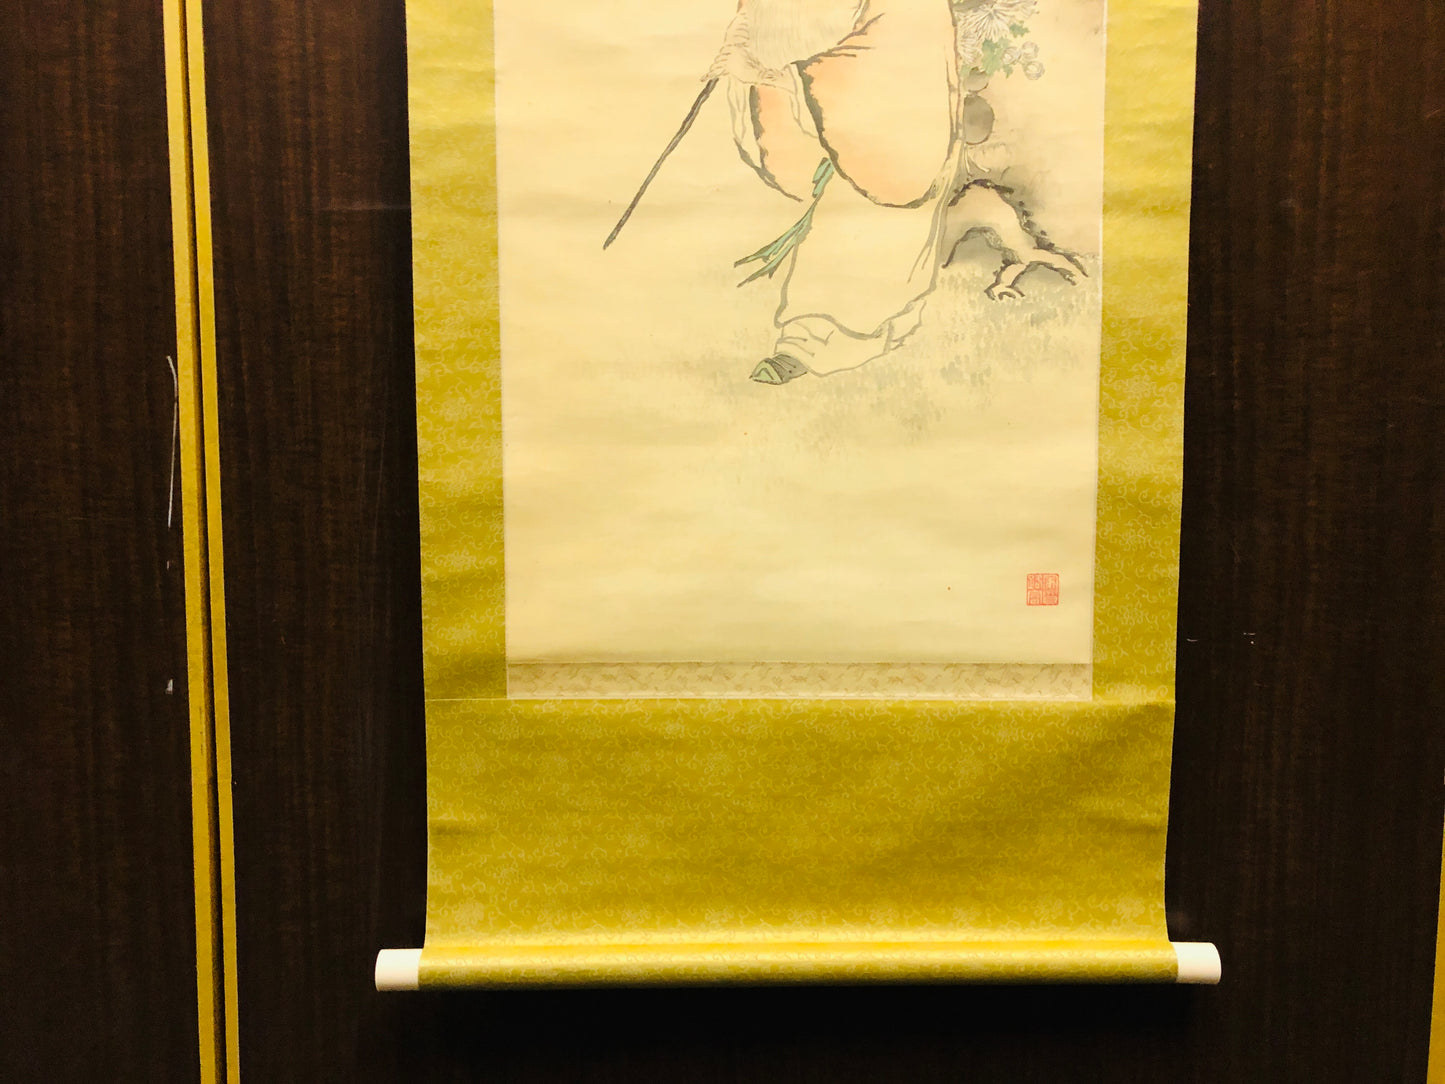 Y6314 [VIDEO] KAKEJIKU Jurojin God of Longevity pine signed Japan antique hanging scroll